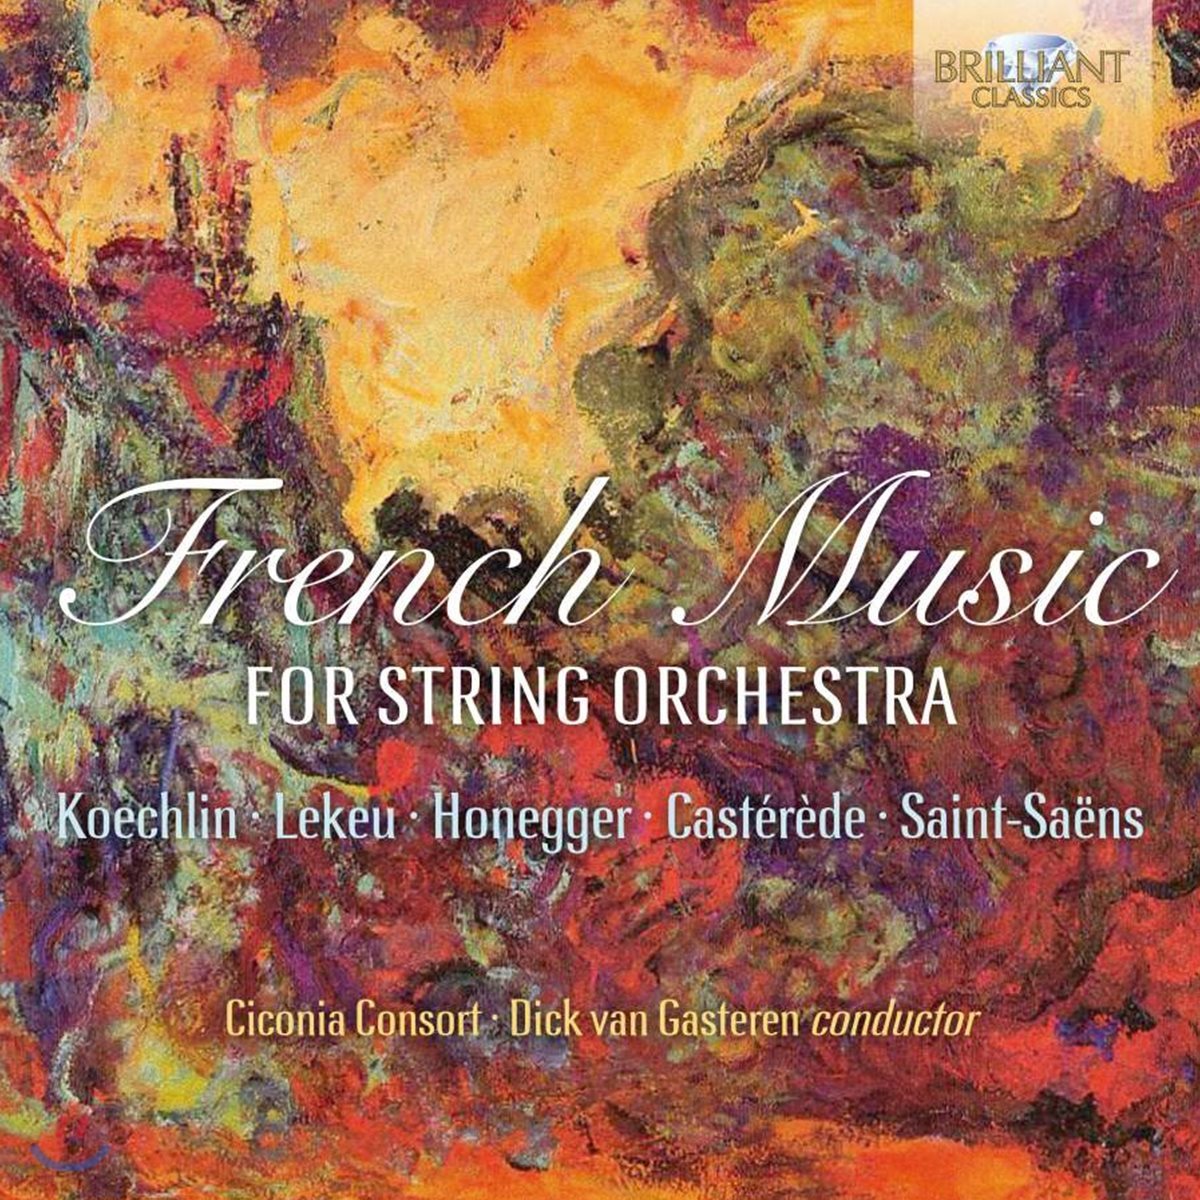 Dick van Gasteren 프랑스 작곡가들의 현악 오케스트라를 위한 작품 모음집 (French Music for String Orchestra)